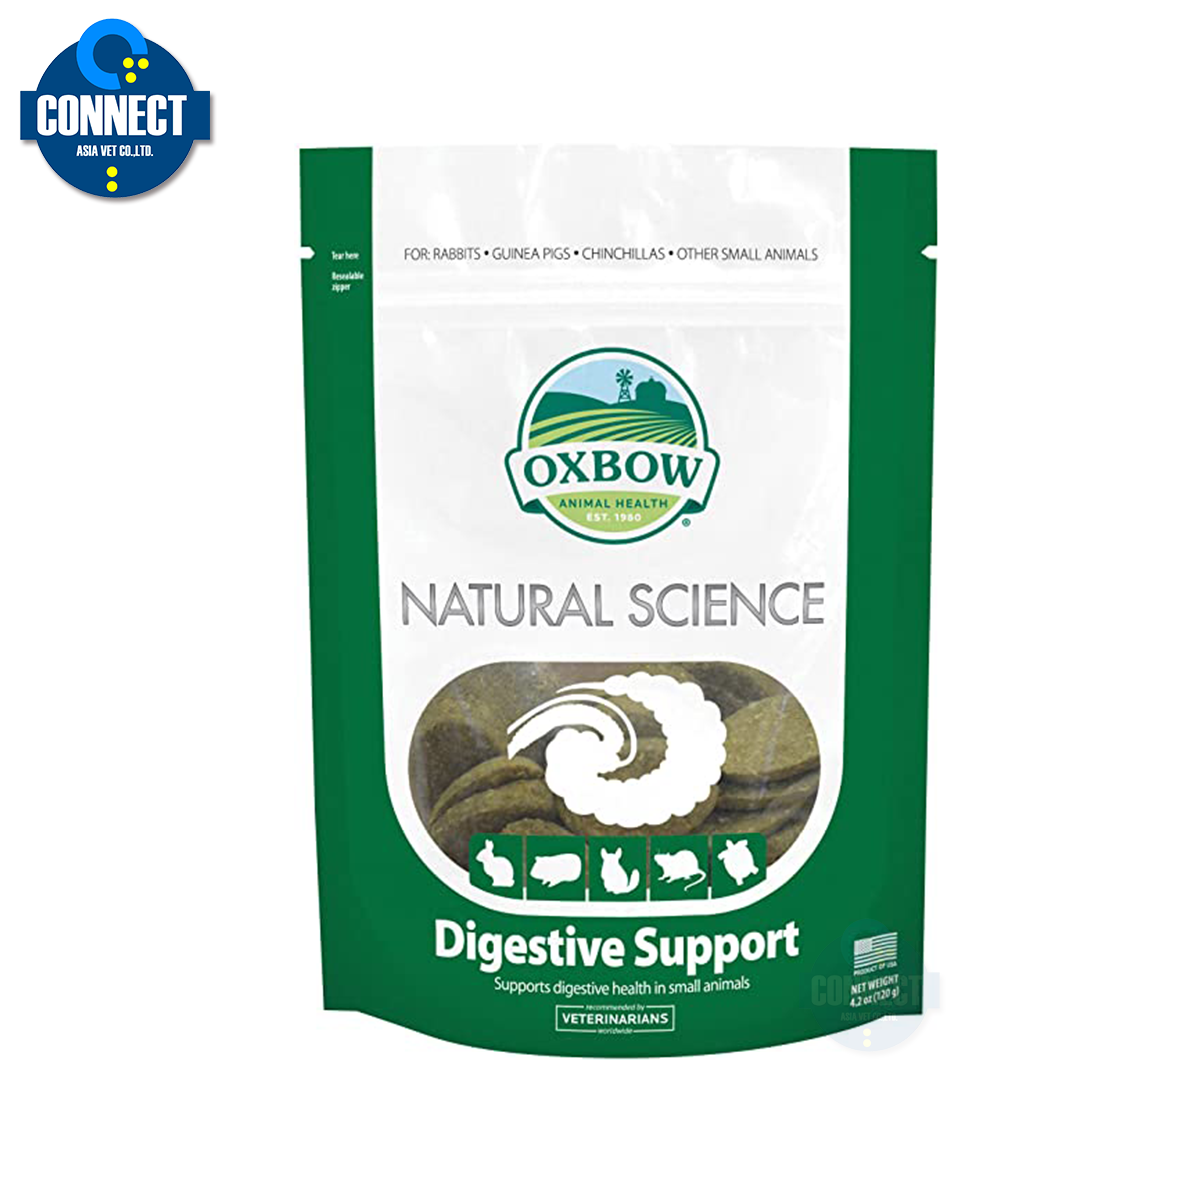 Oxbow - Natural Science Digestive Support ขนาดถุง 295 กรัม.